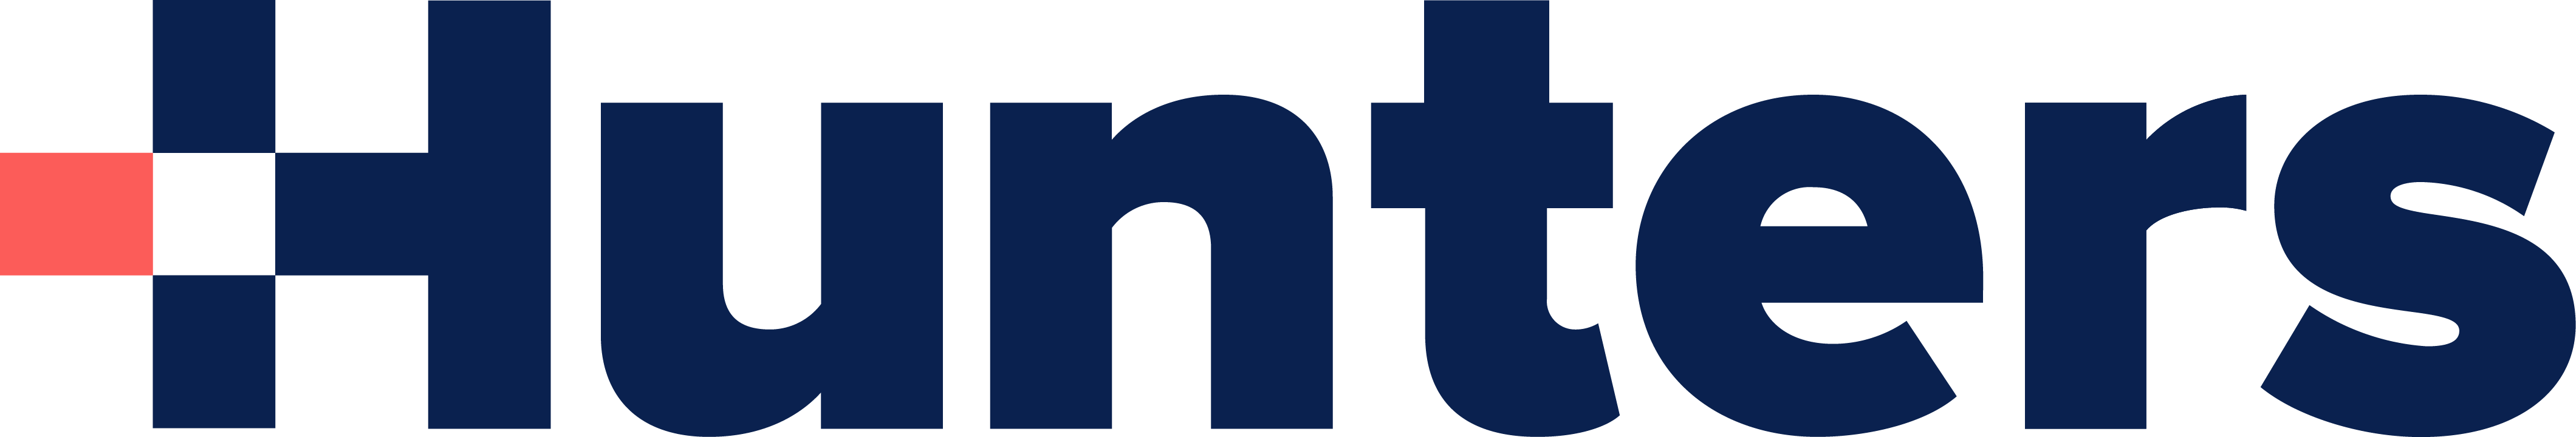 Hunters Logo Blue